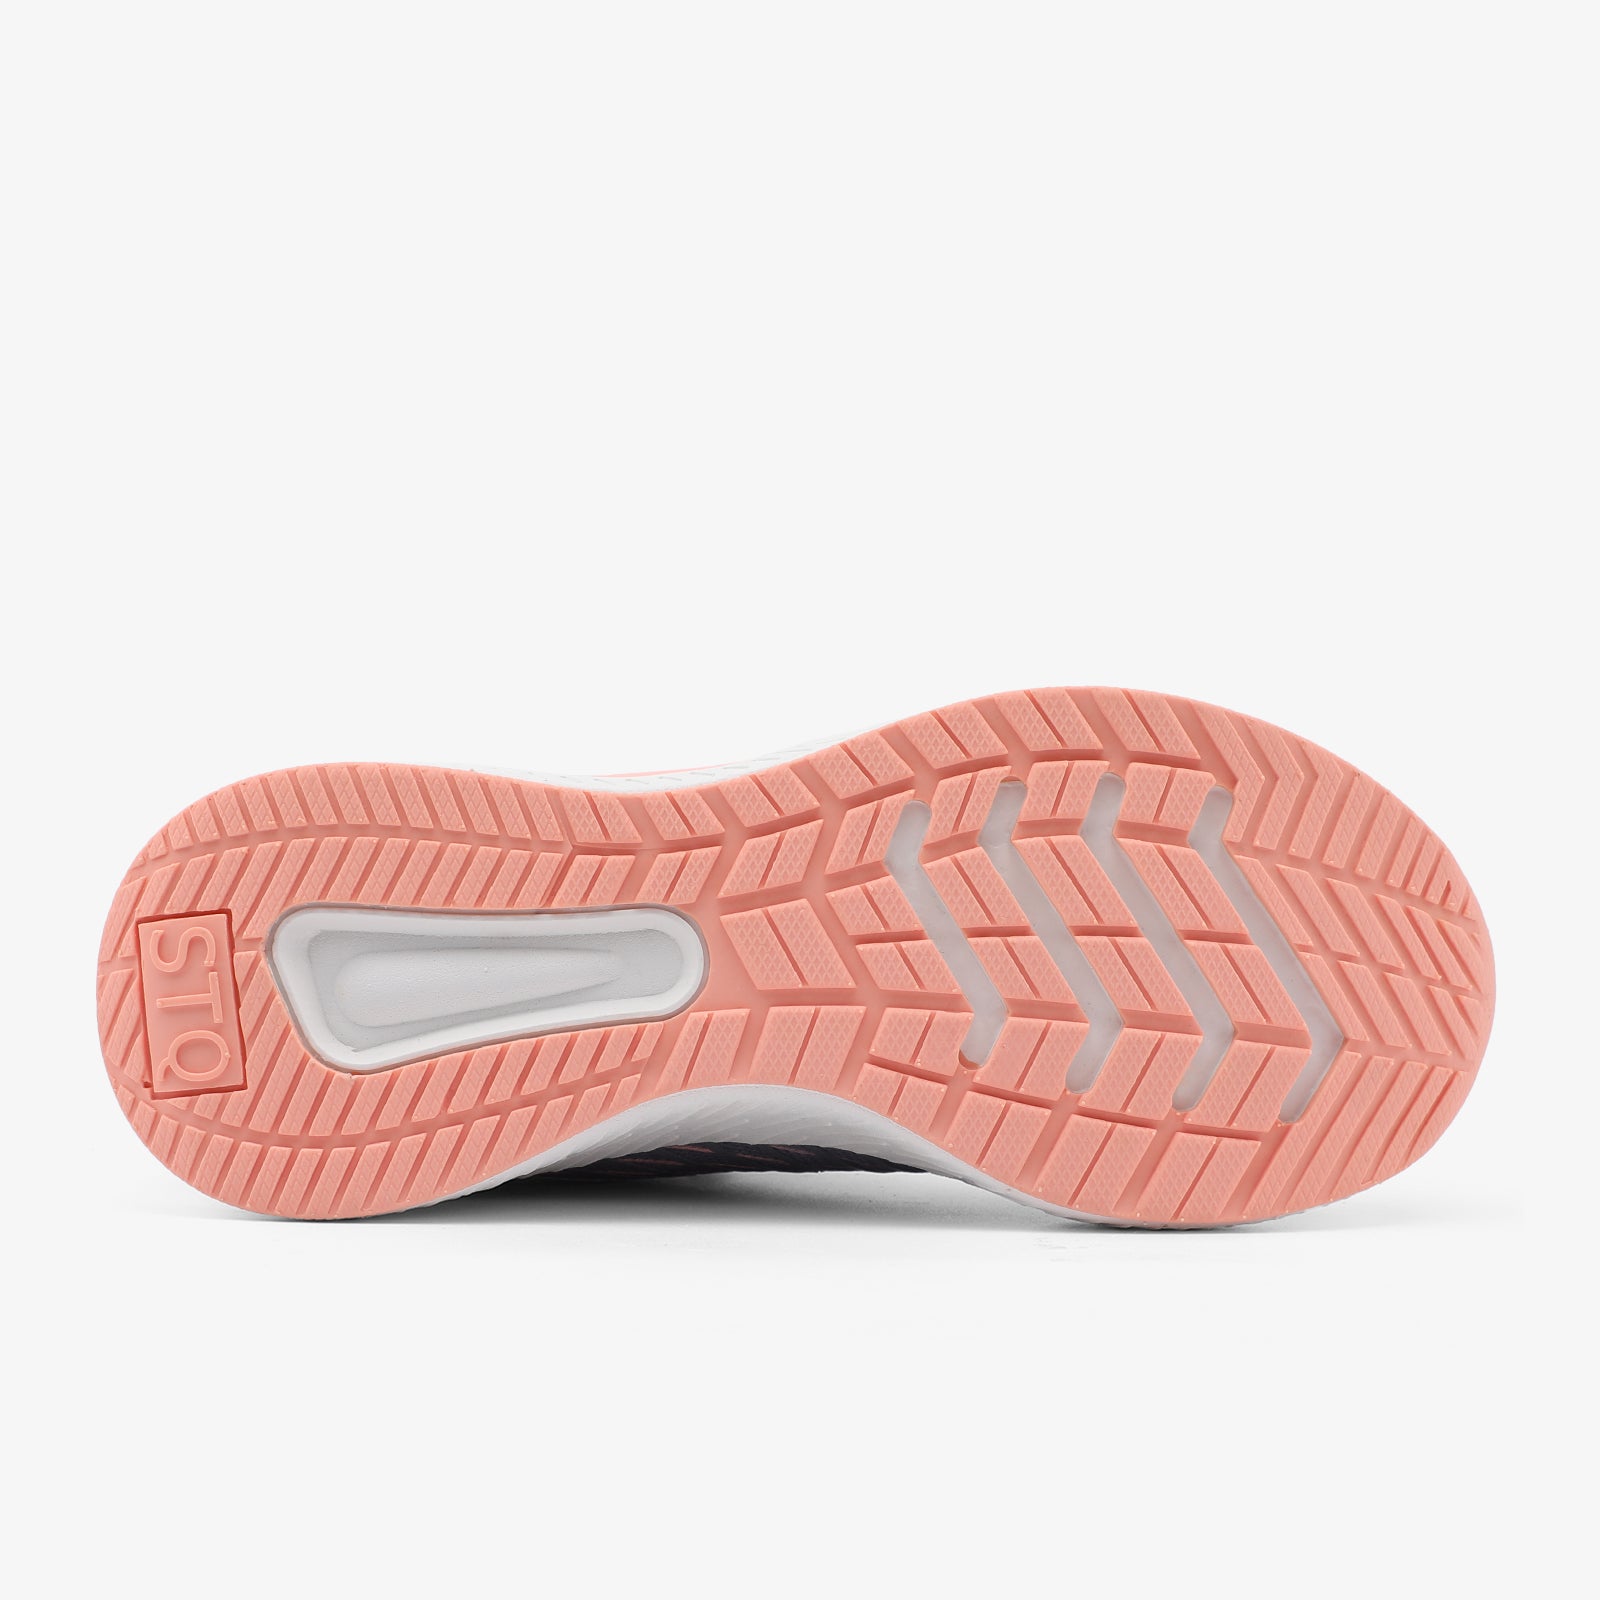 stq-fashion-sneakers-grey-pink-sole-view